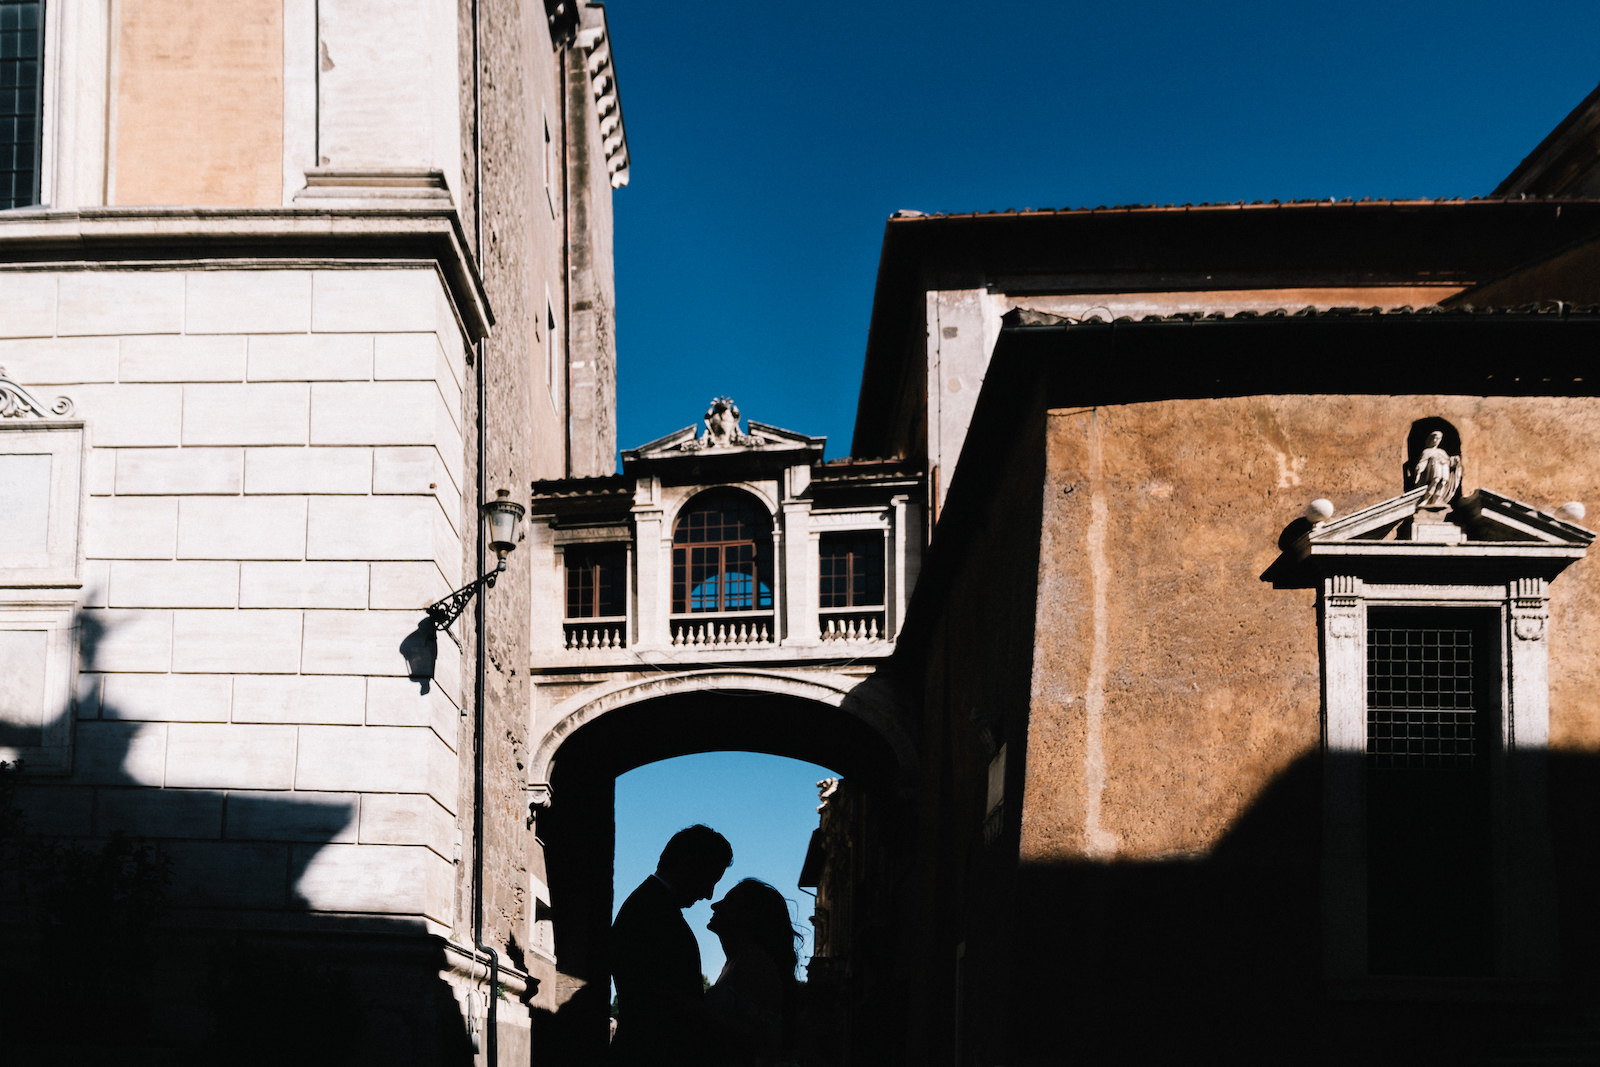 Wedding in Rome - Matteo Lomonte wedding photographer